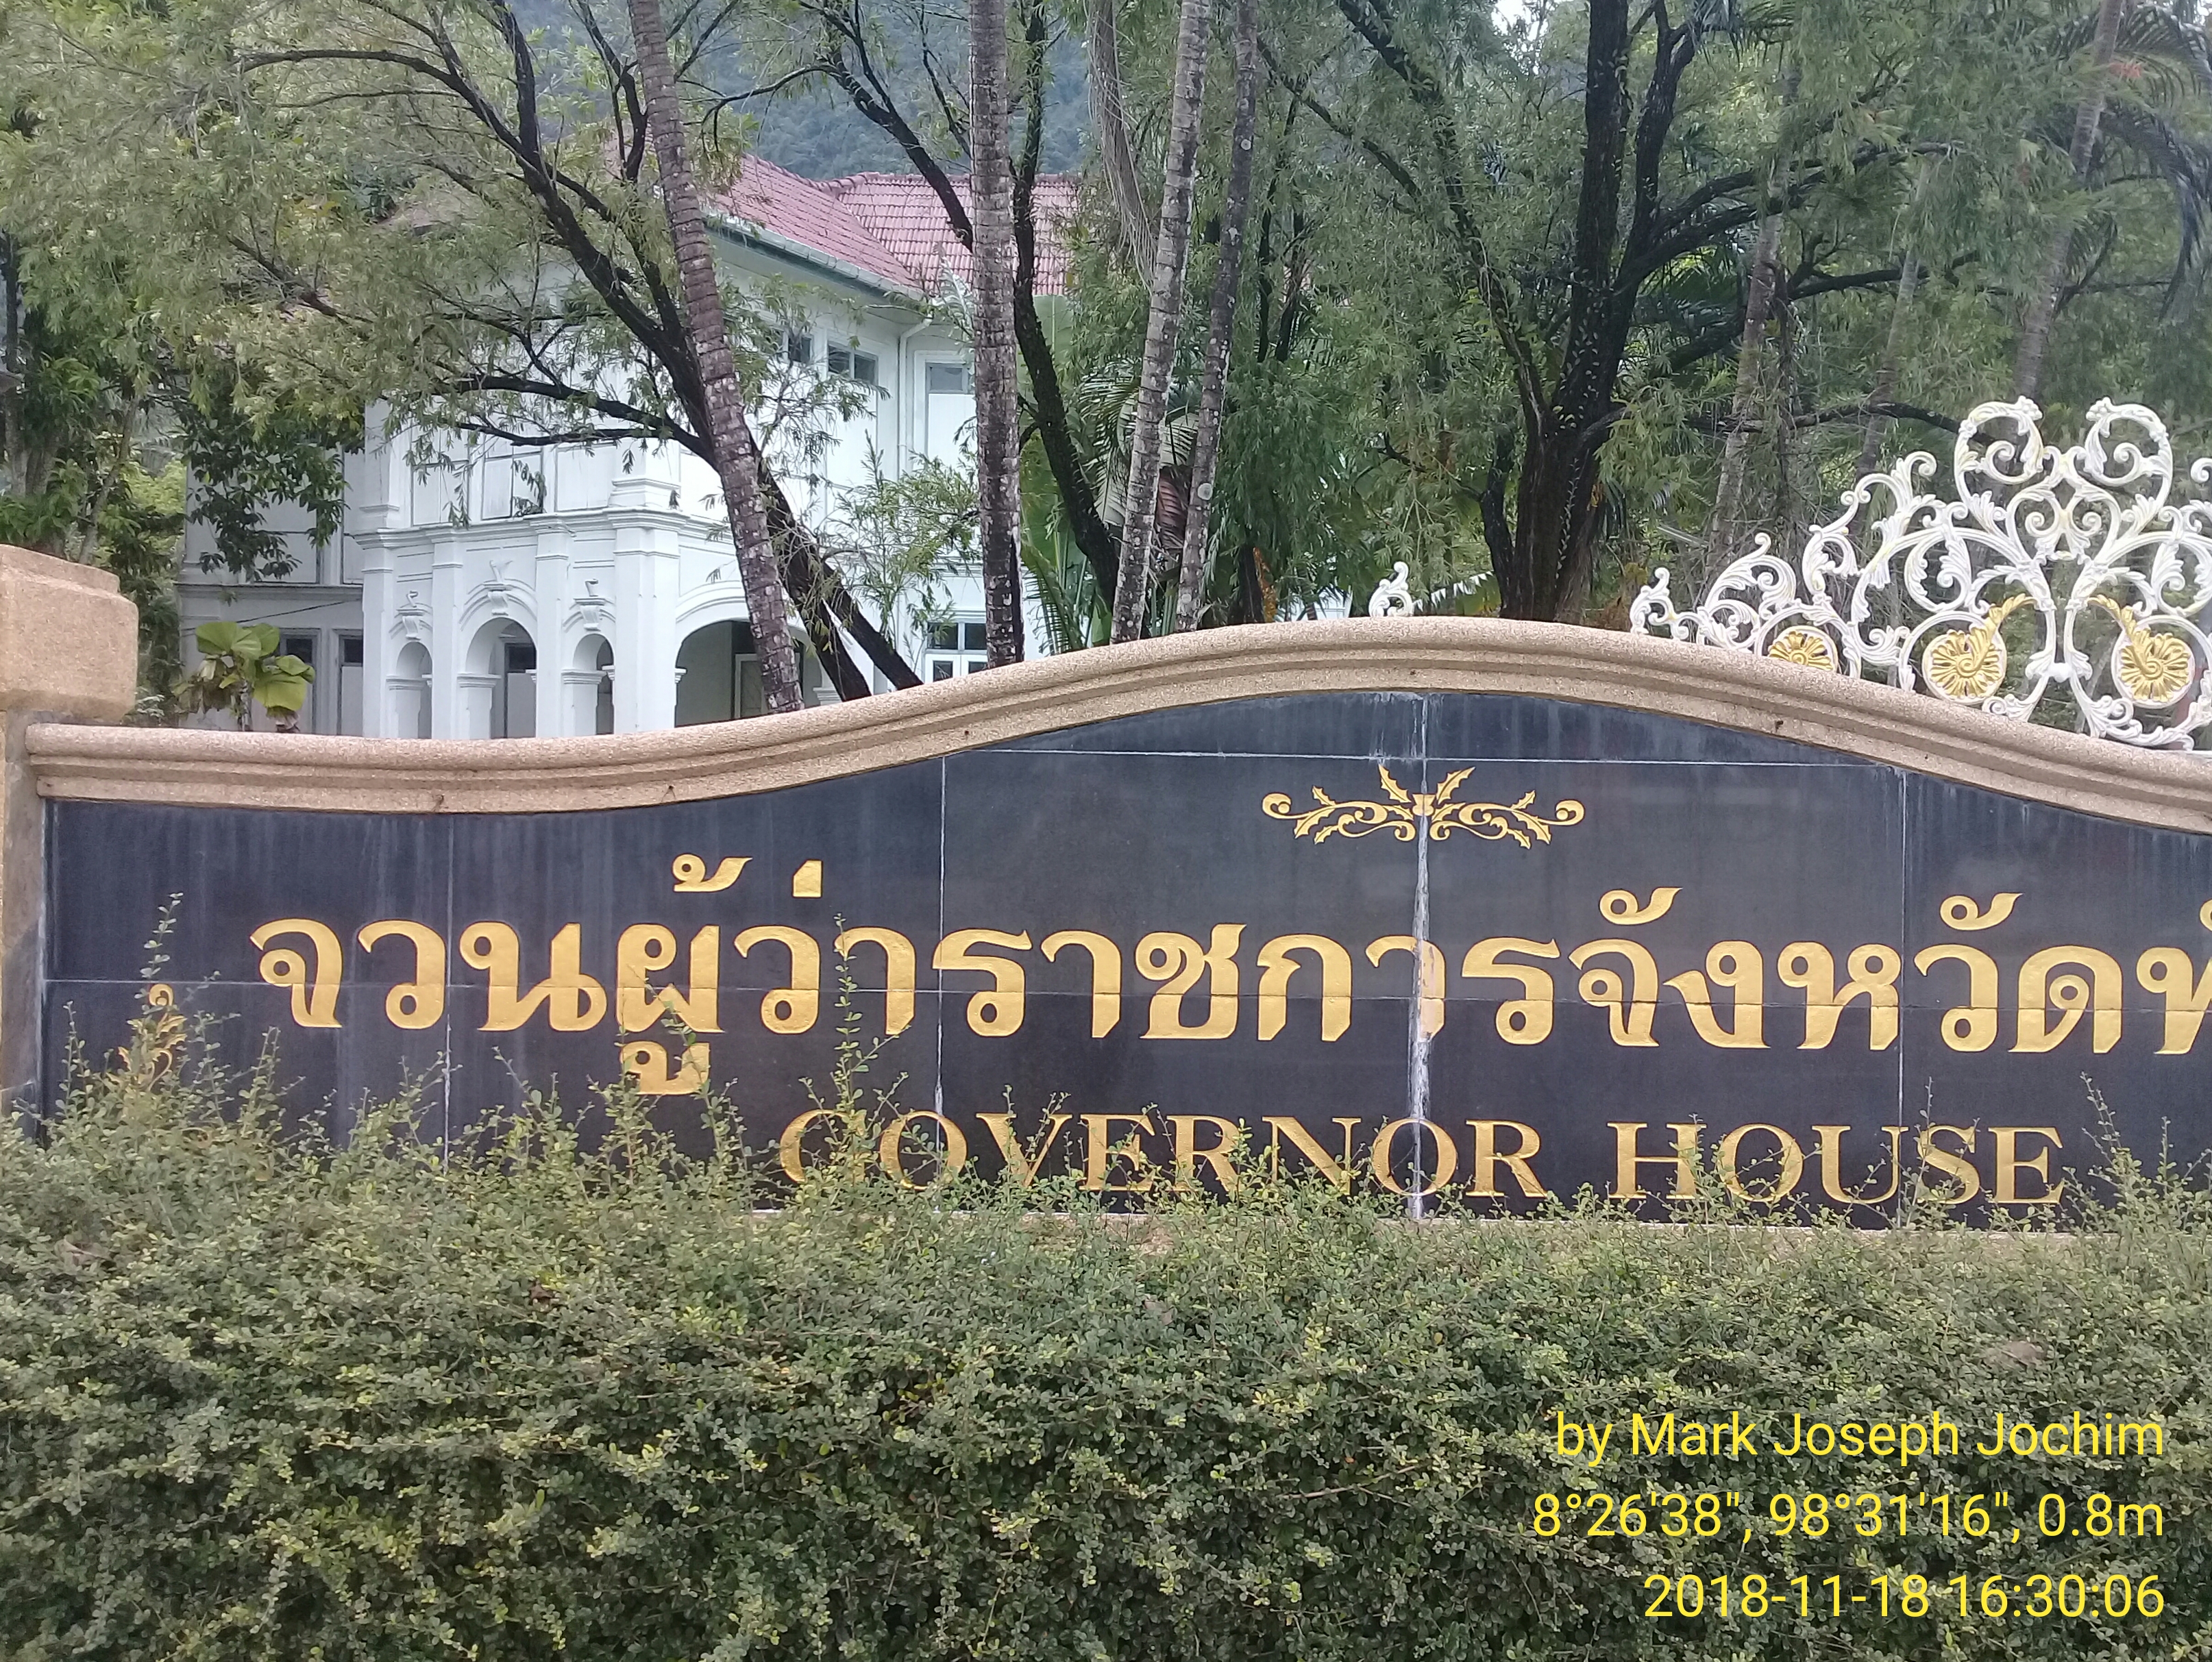 The Phang Nga provincial governor's residence in Phang Nga Town. Photo taken by Mark Joseph Jochim on November 18, 2018.